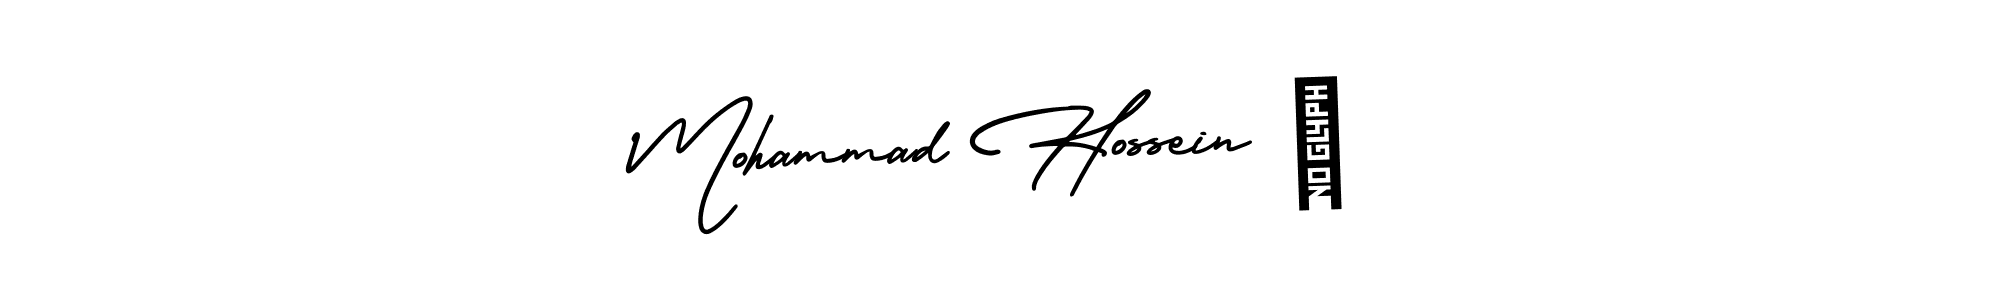 How to Draw Mohammad Hossein ❤ signature style? AmerikaSignatureDemo-Regular is a latest design signature styles for name Mohammad Hossein ❤. Mohammad Hossein ❤ signature style 3 images and pictures png